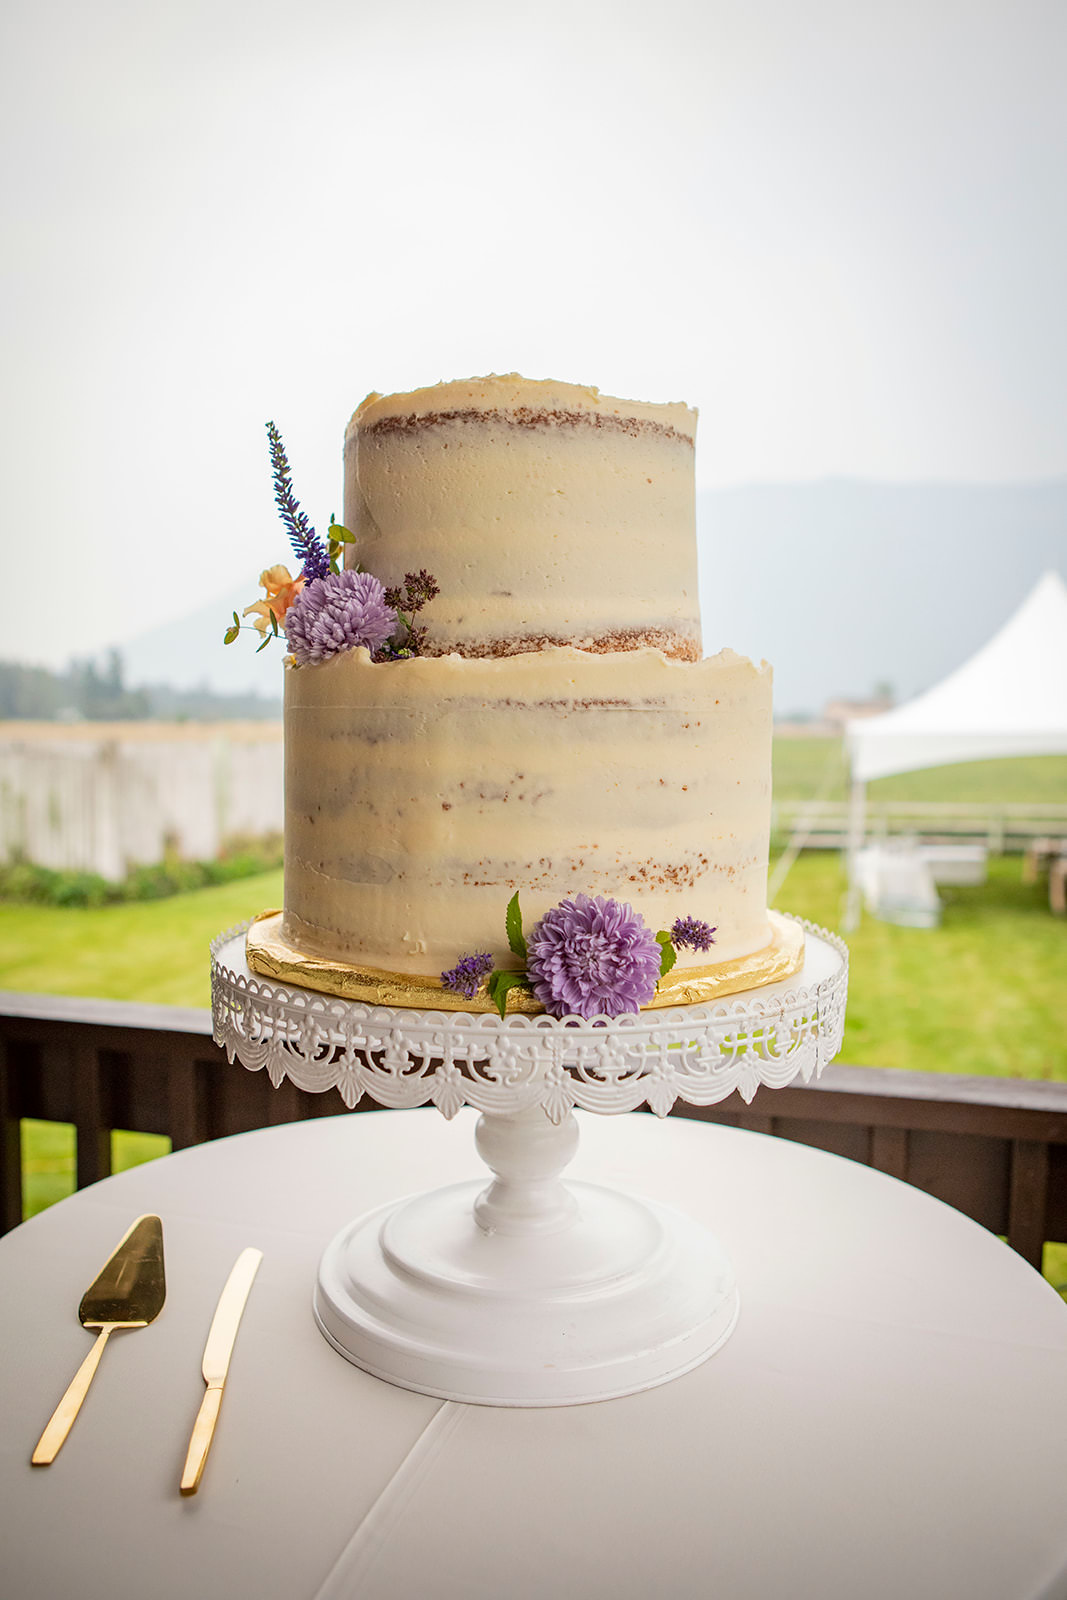 White wedding cake on white cake stand. Gold cake knife set.